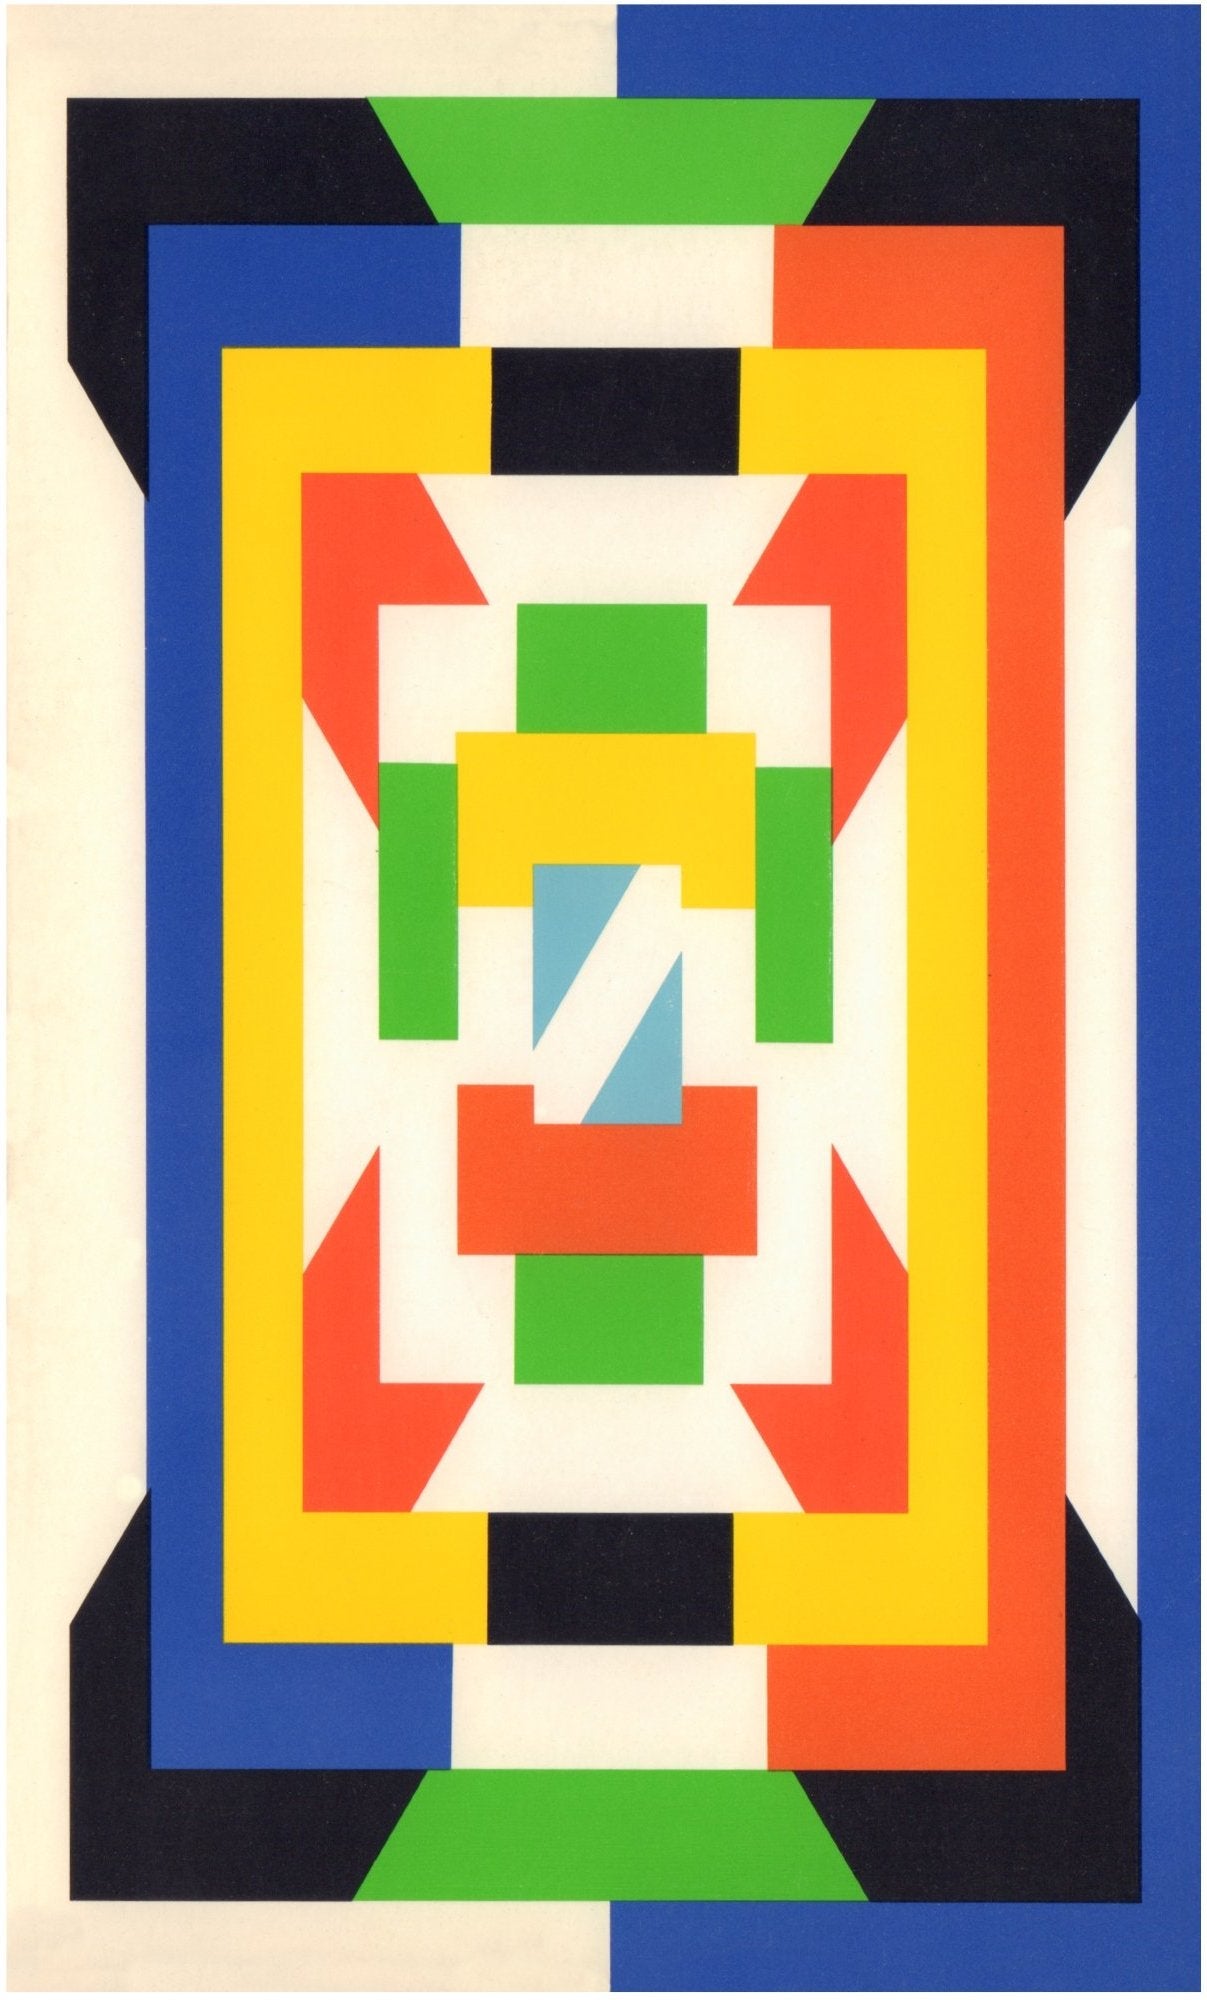 Pan American "International Flag Service" 1971 Menu Art